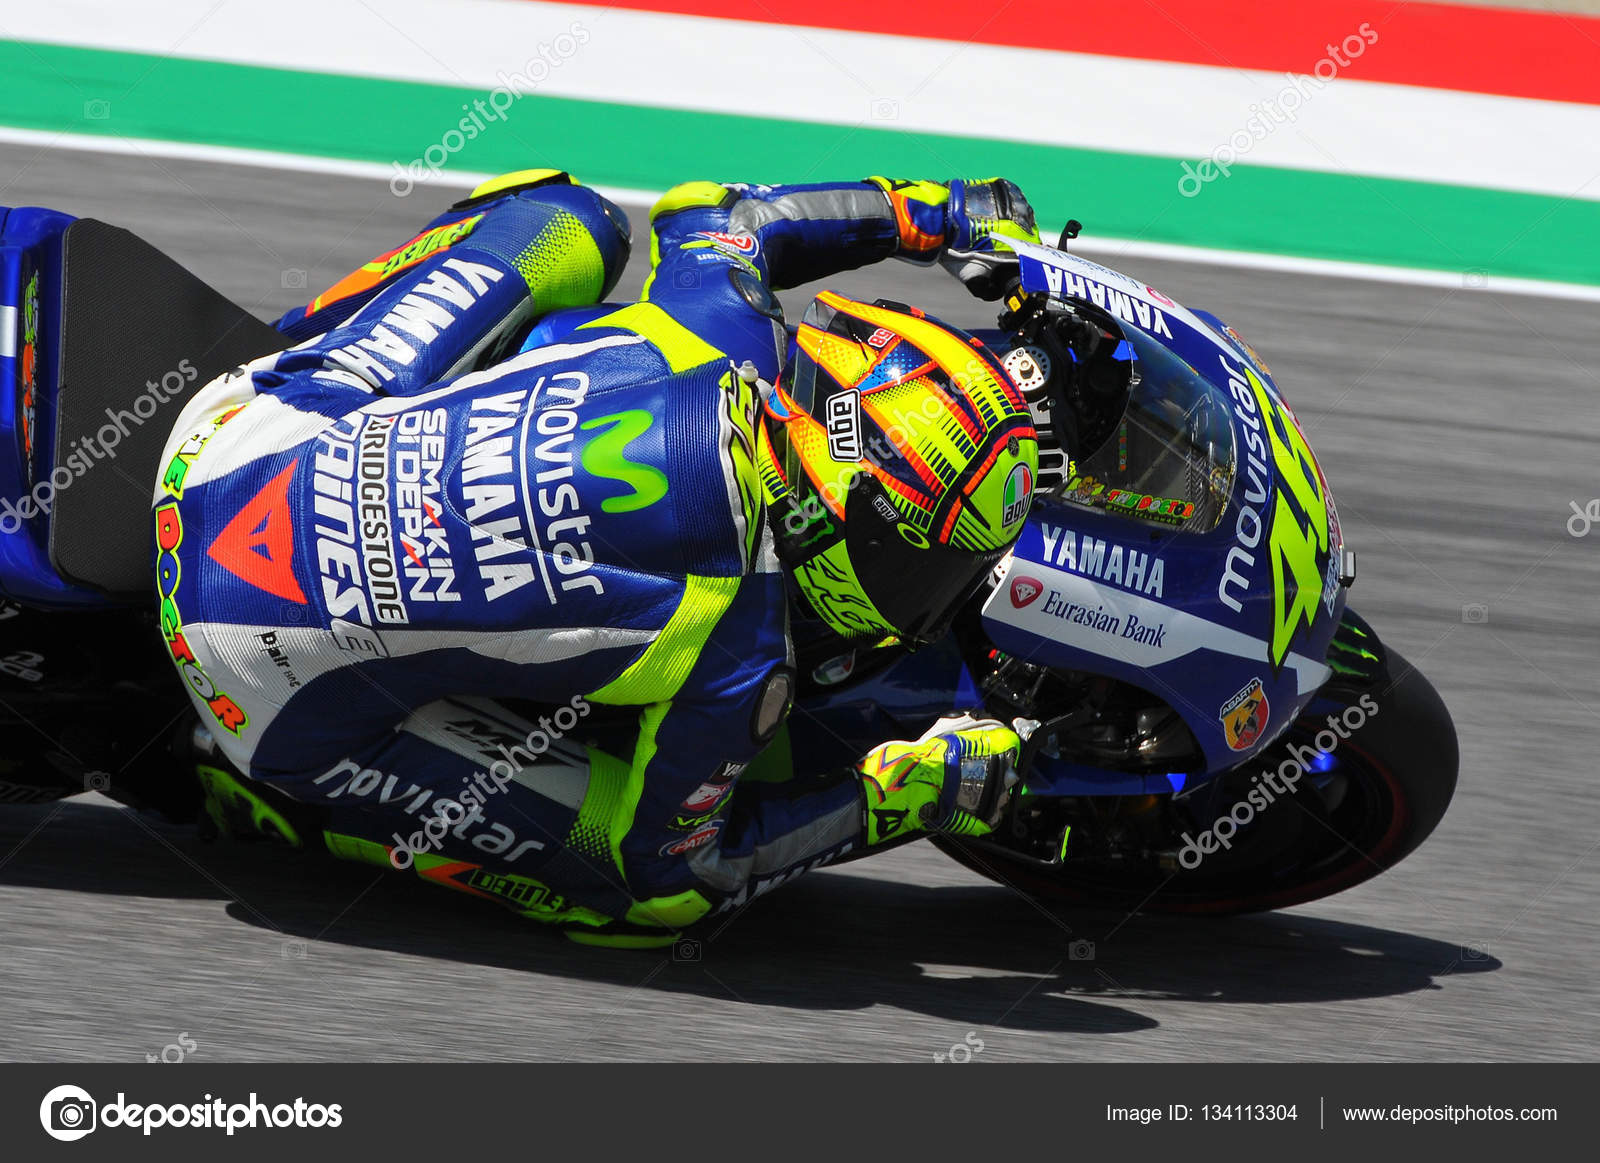 Valentino Rossi's last race in Italy - italiani.it